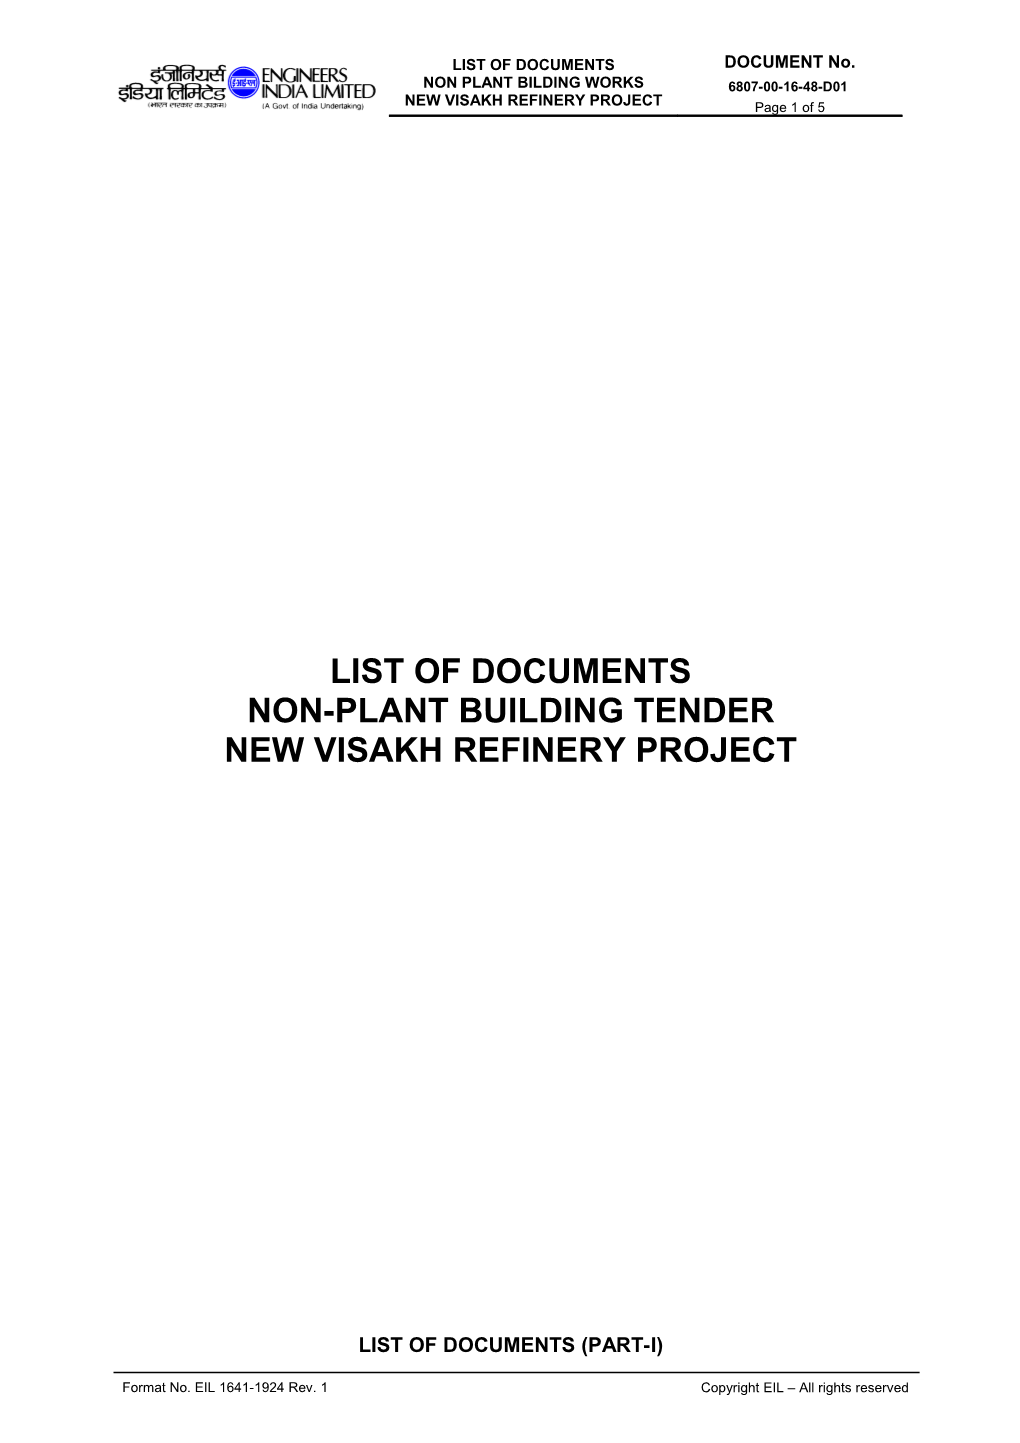 Non-Plant Building Tender